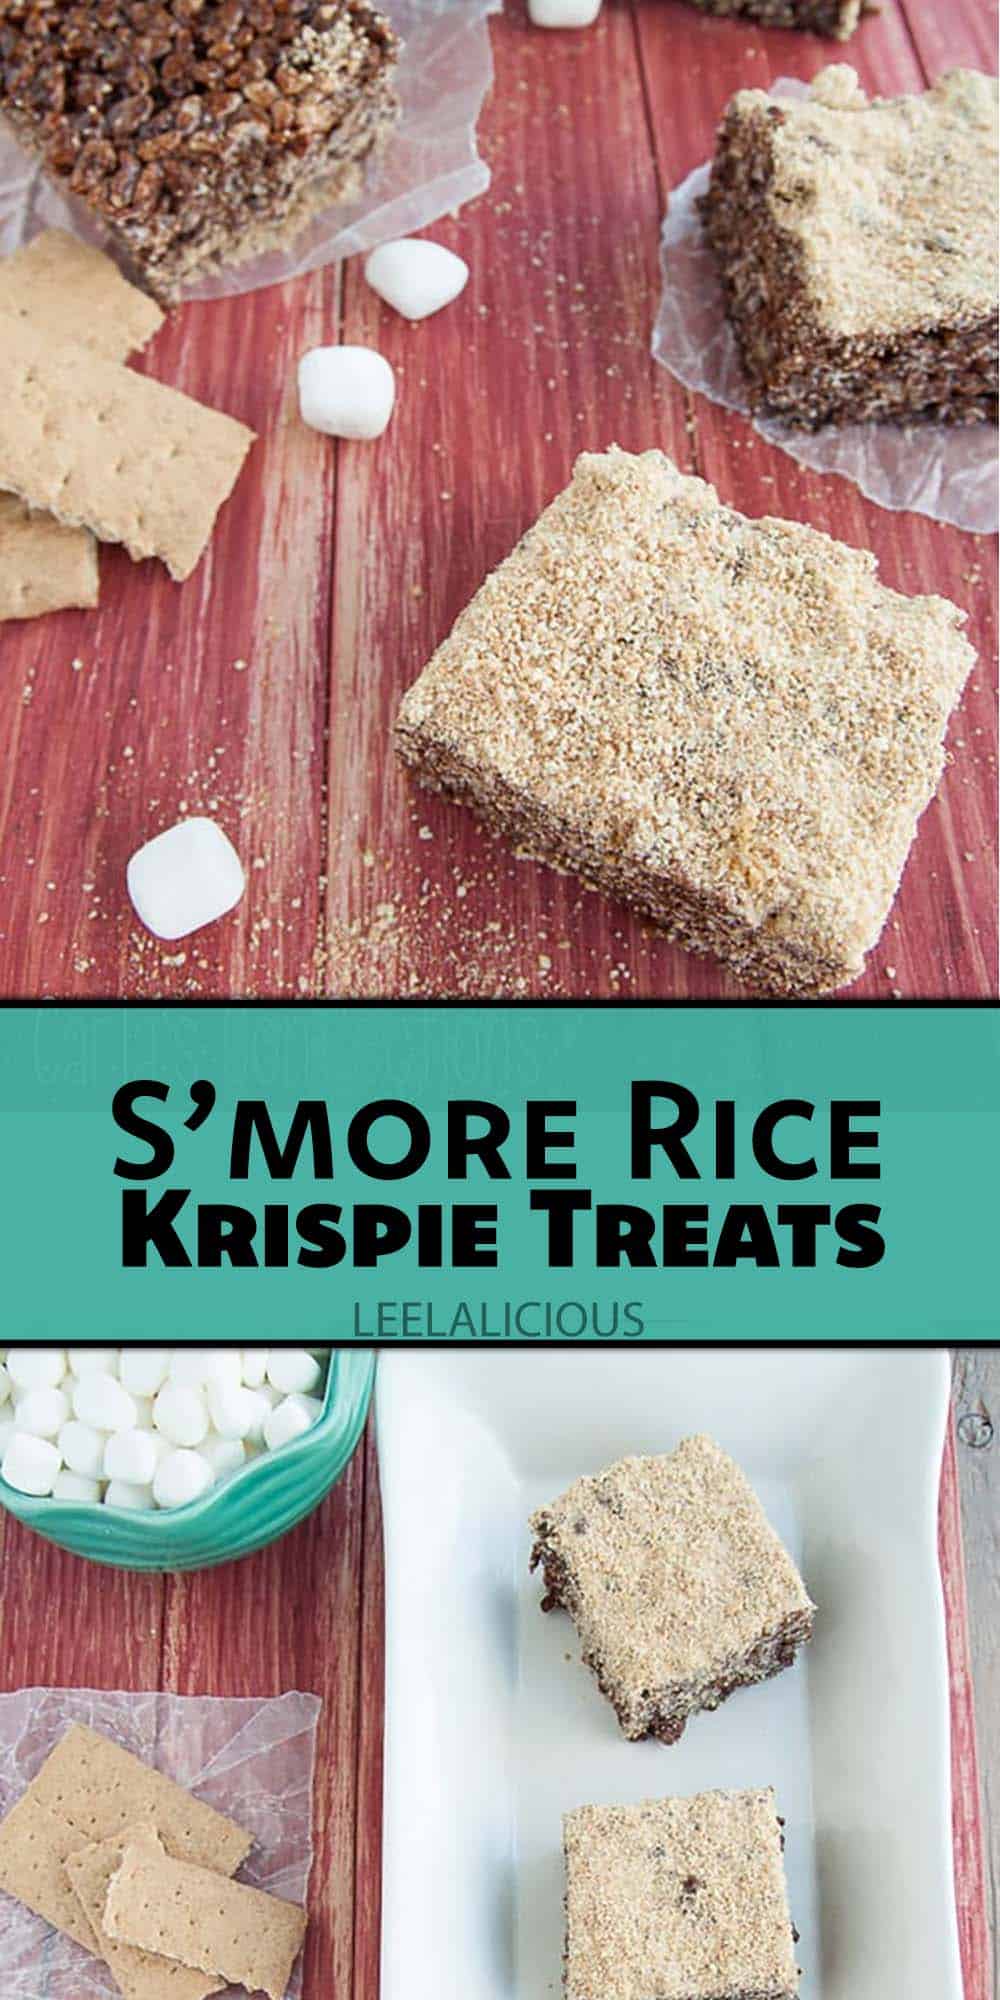 S’more Rice Krispie Treats